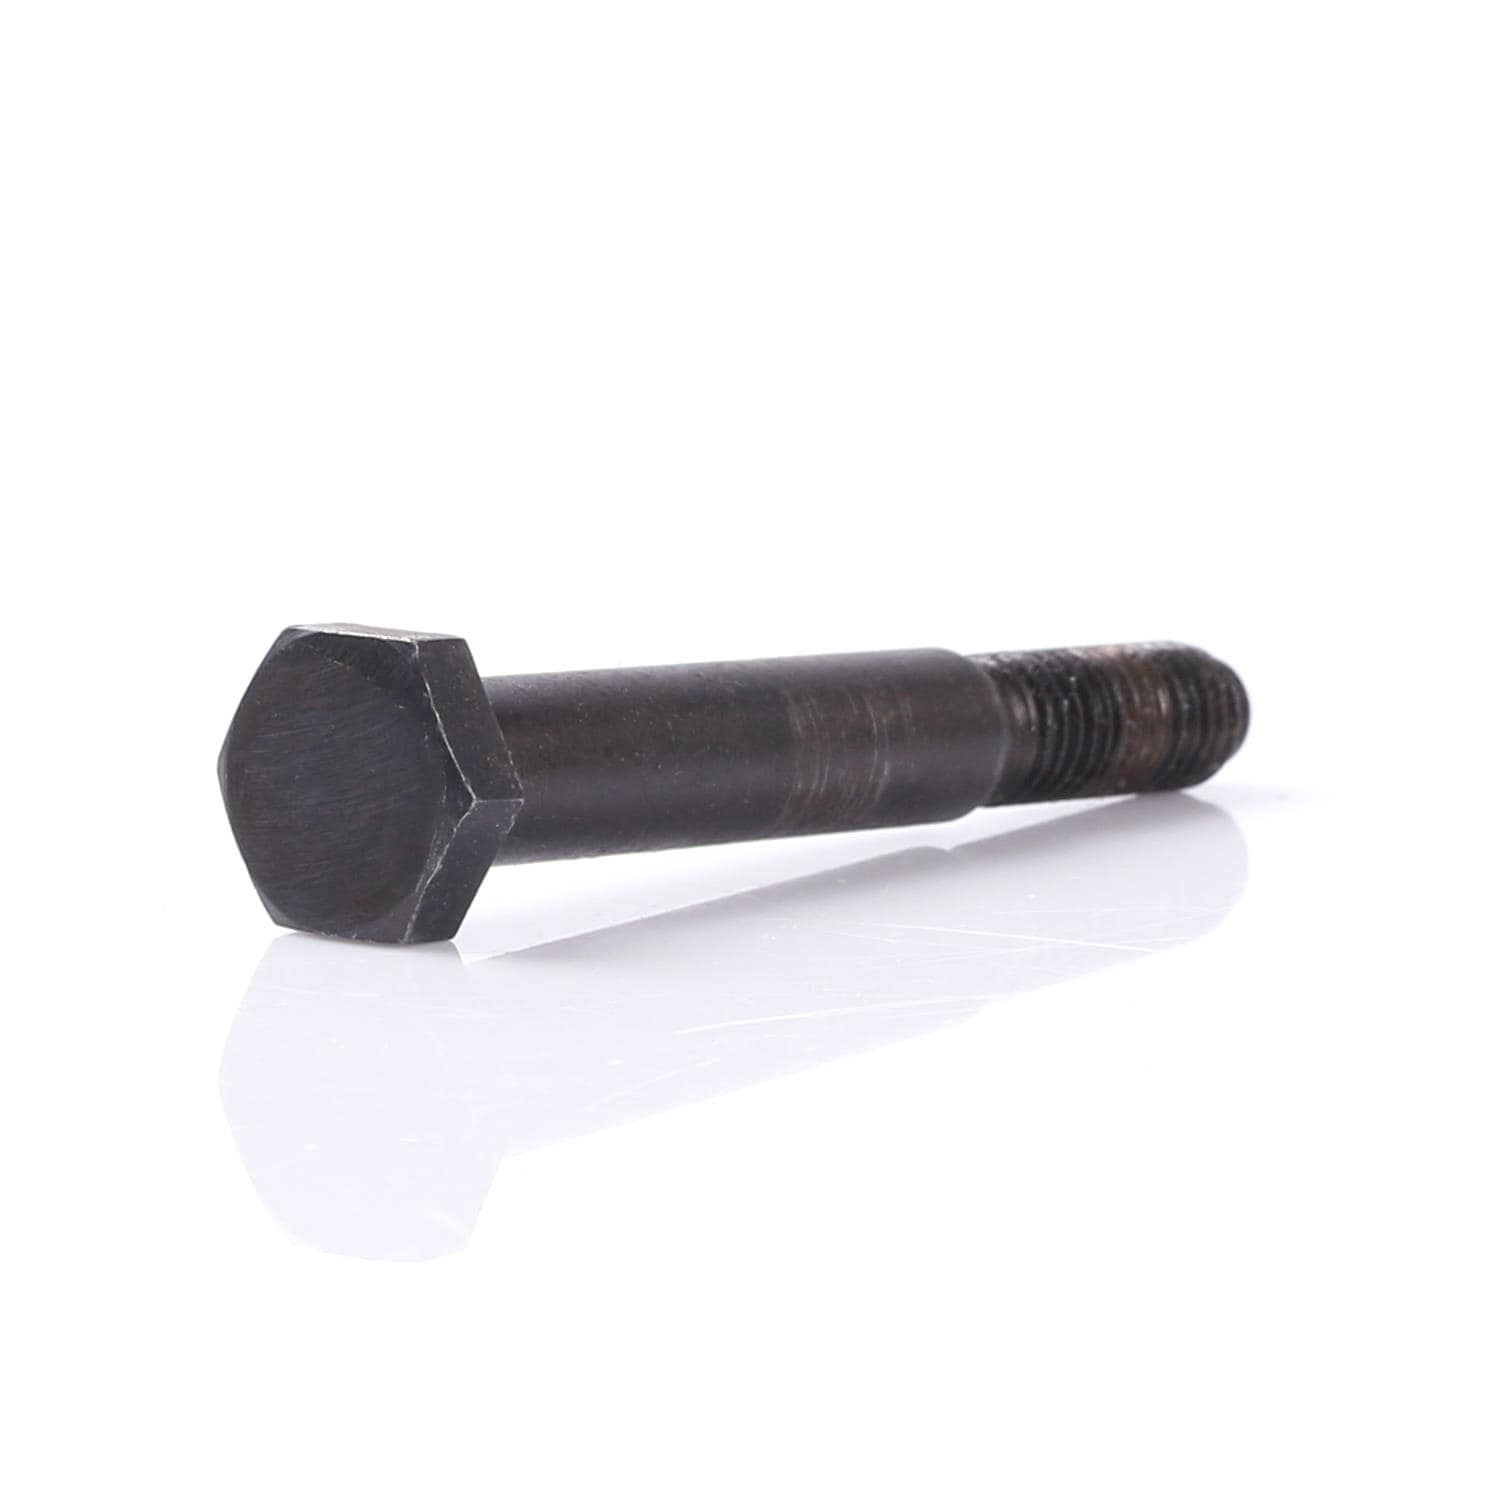 Pedal screw, long 60mm